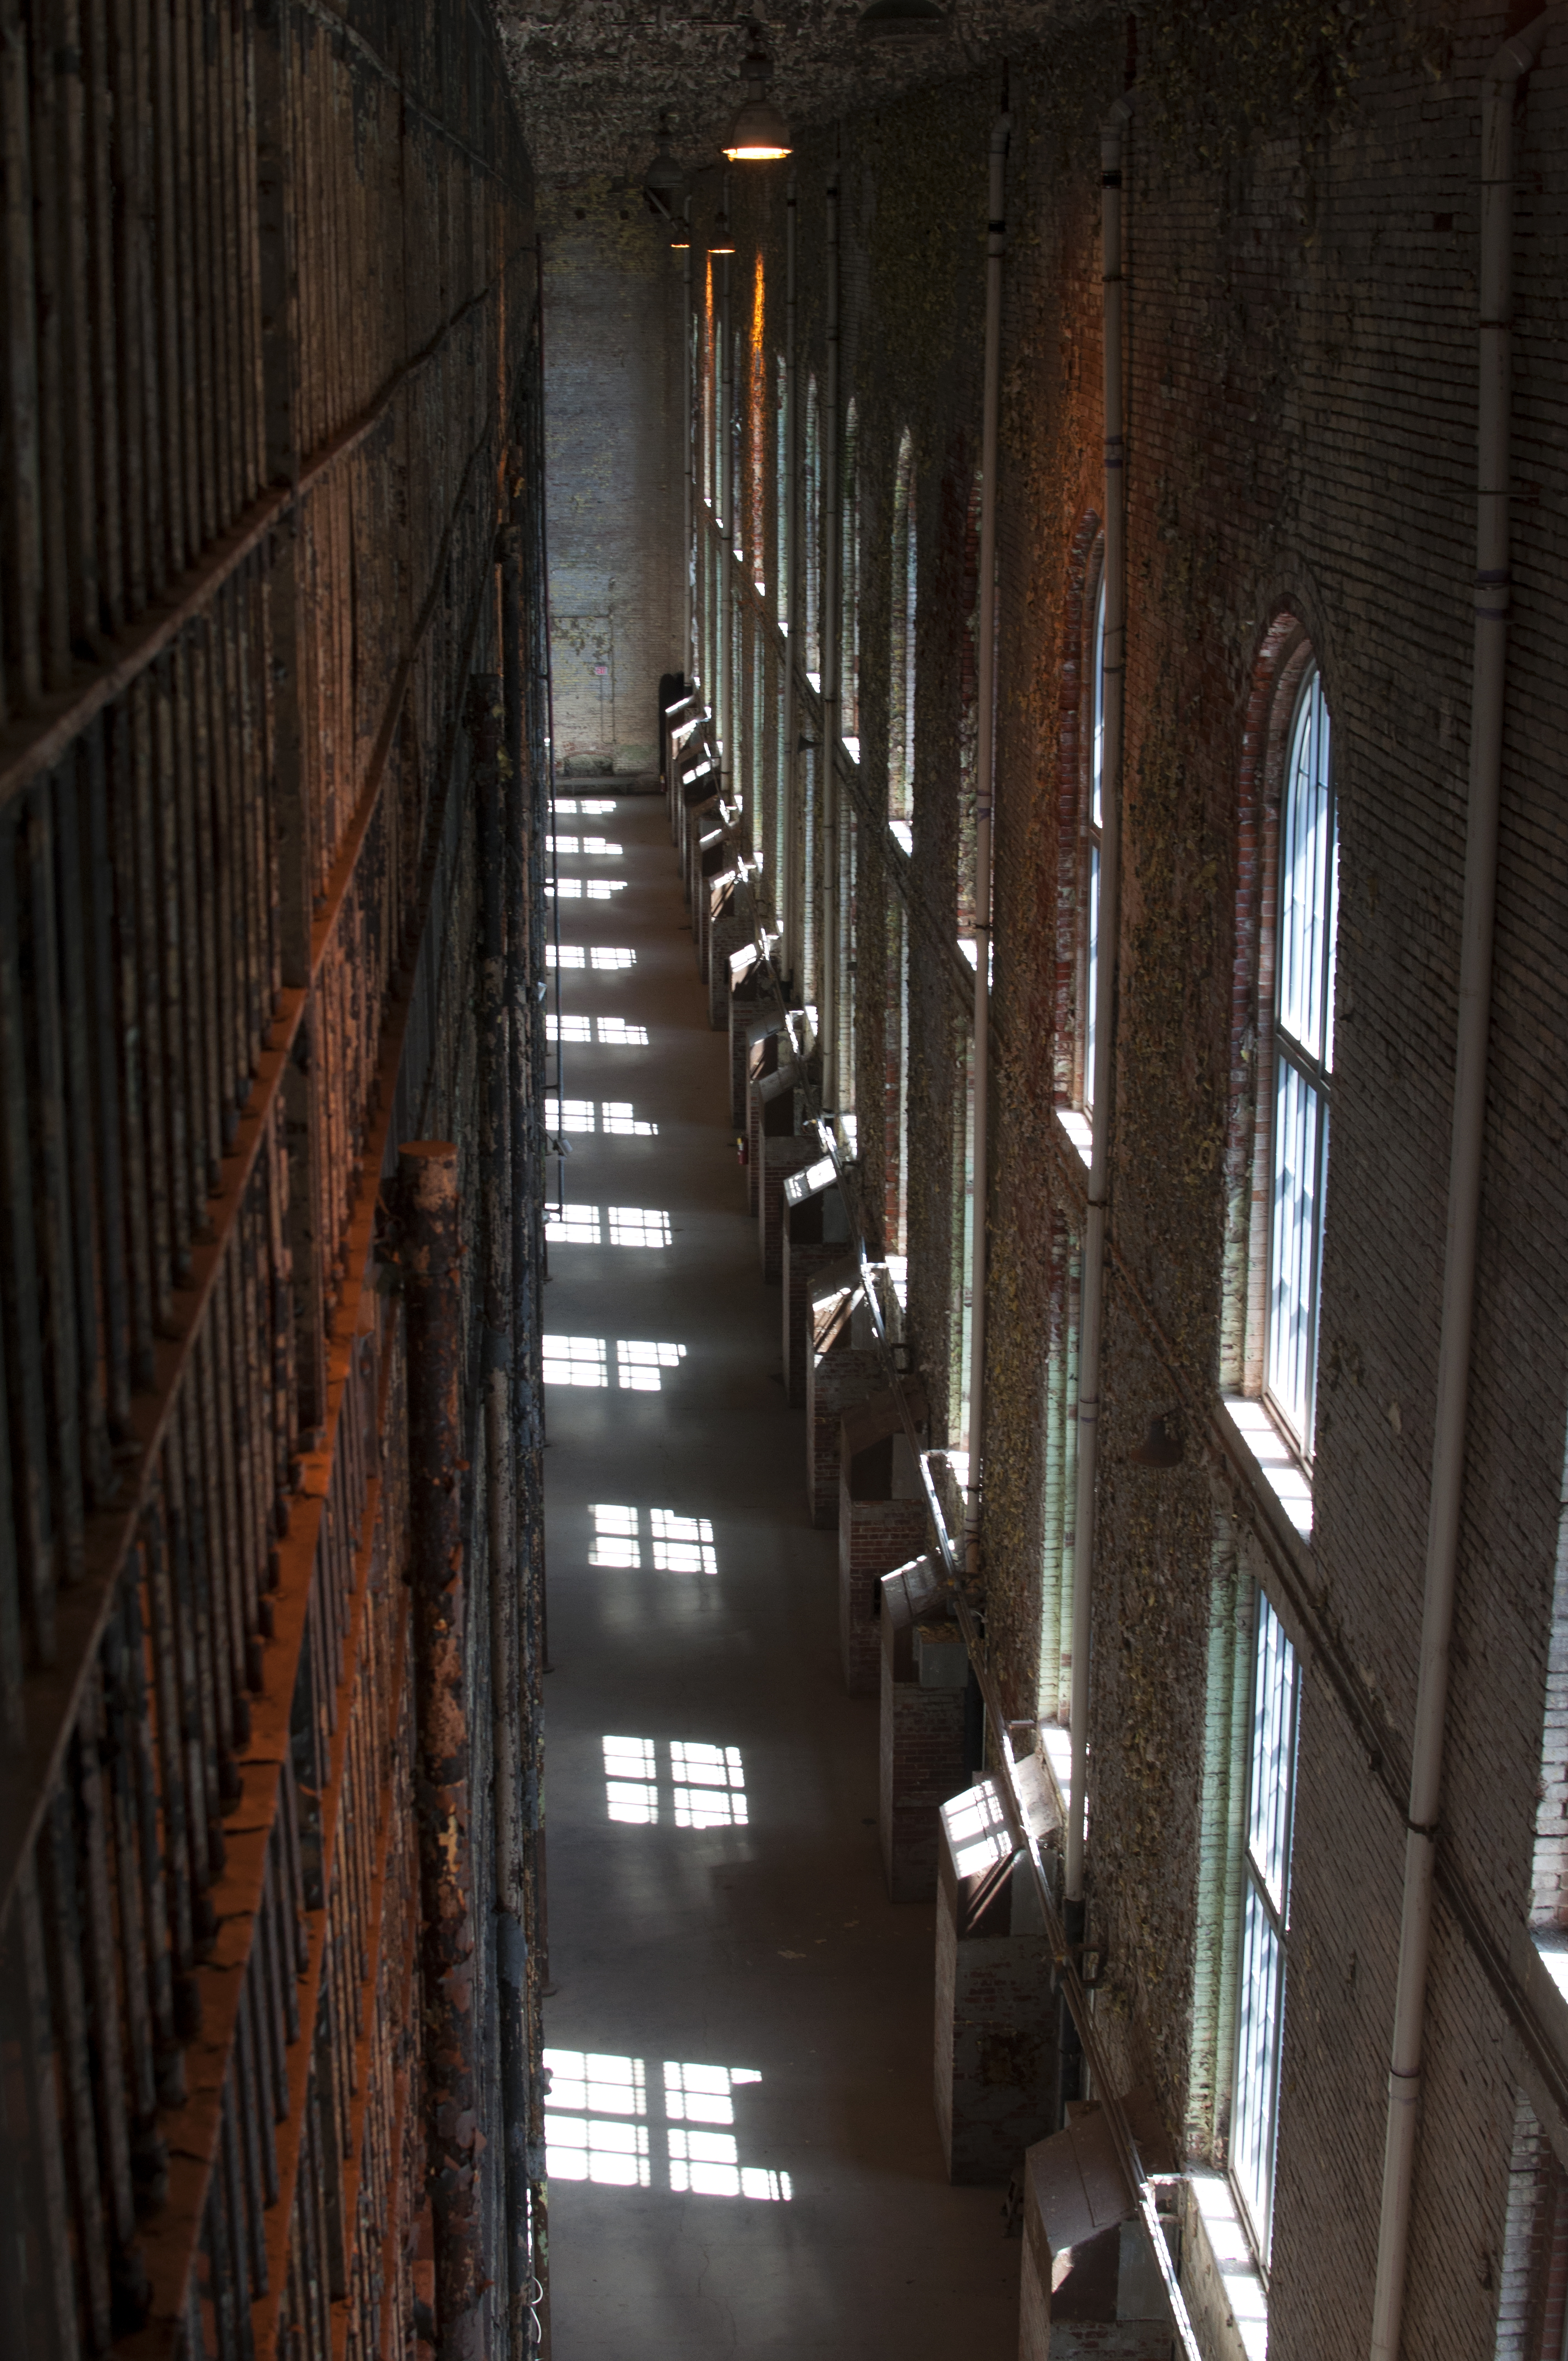 File:Inside The Prison.jpg - Wikimedia Commons